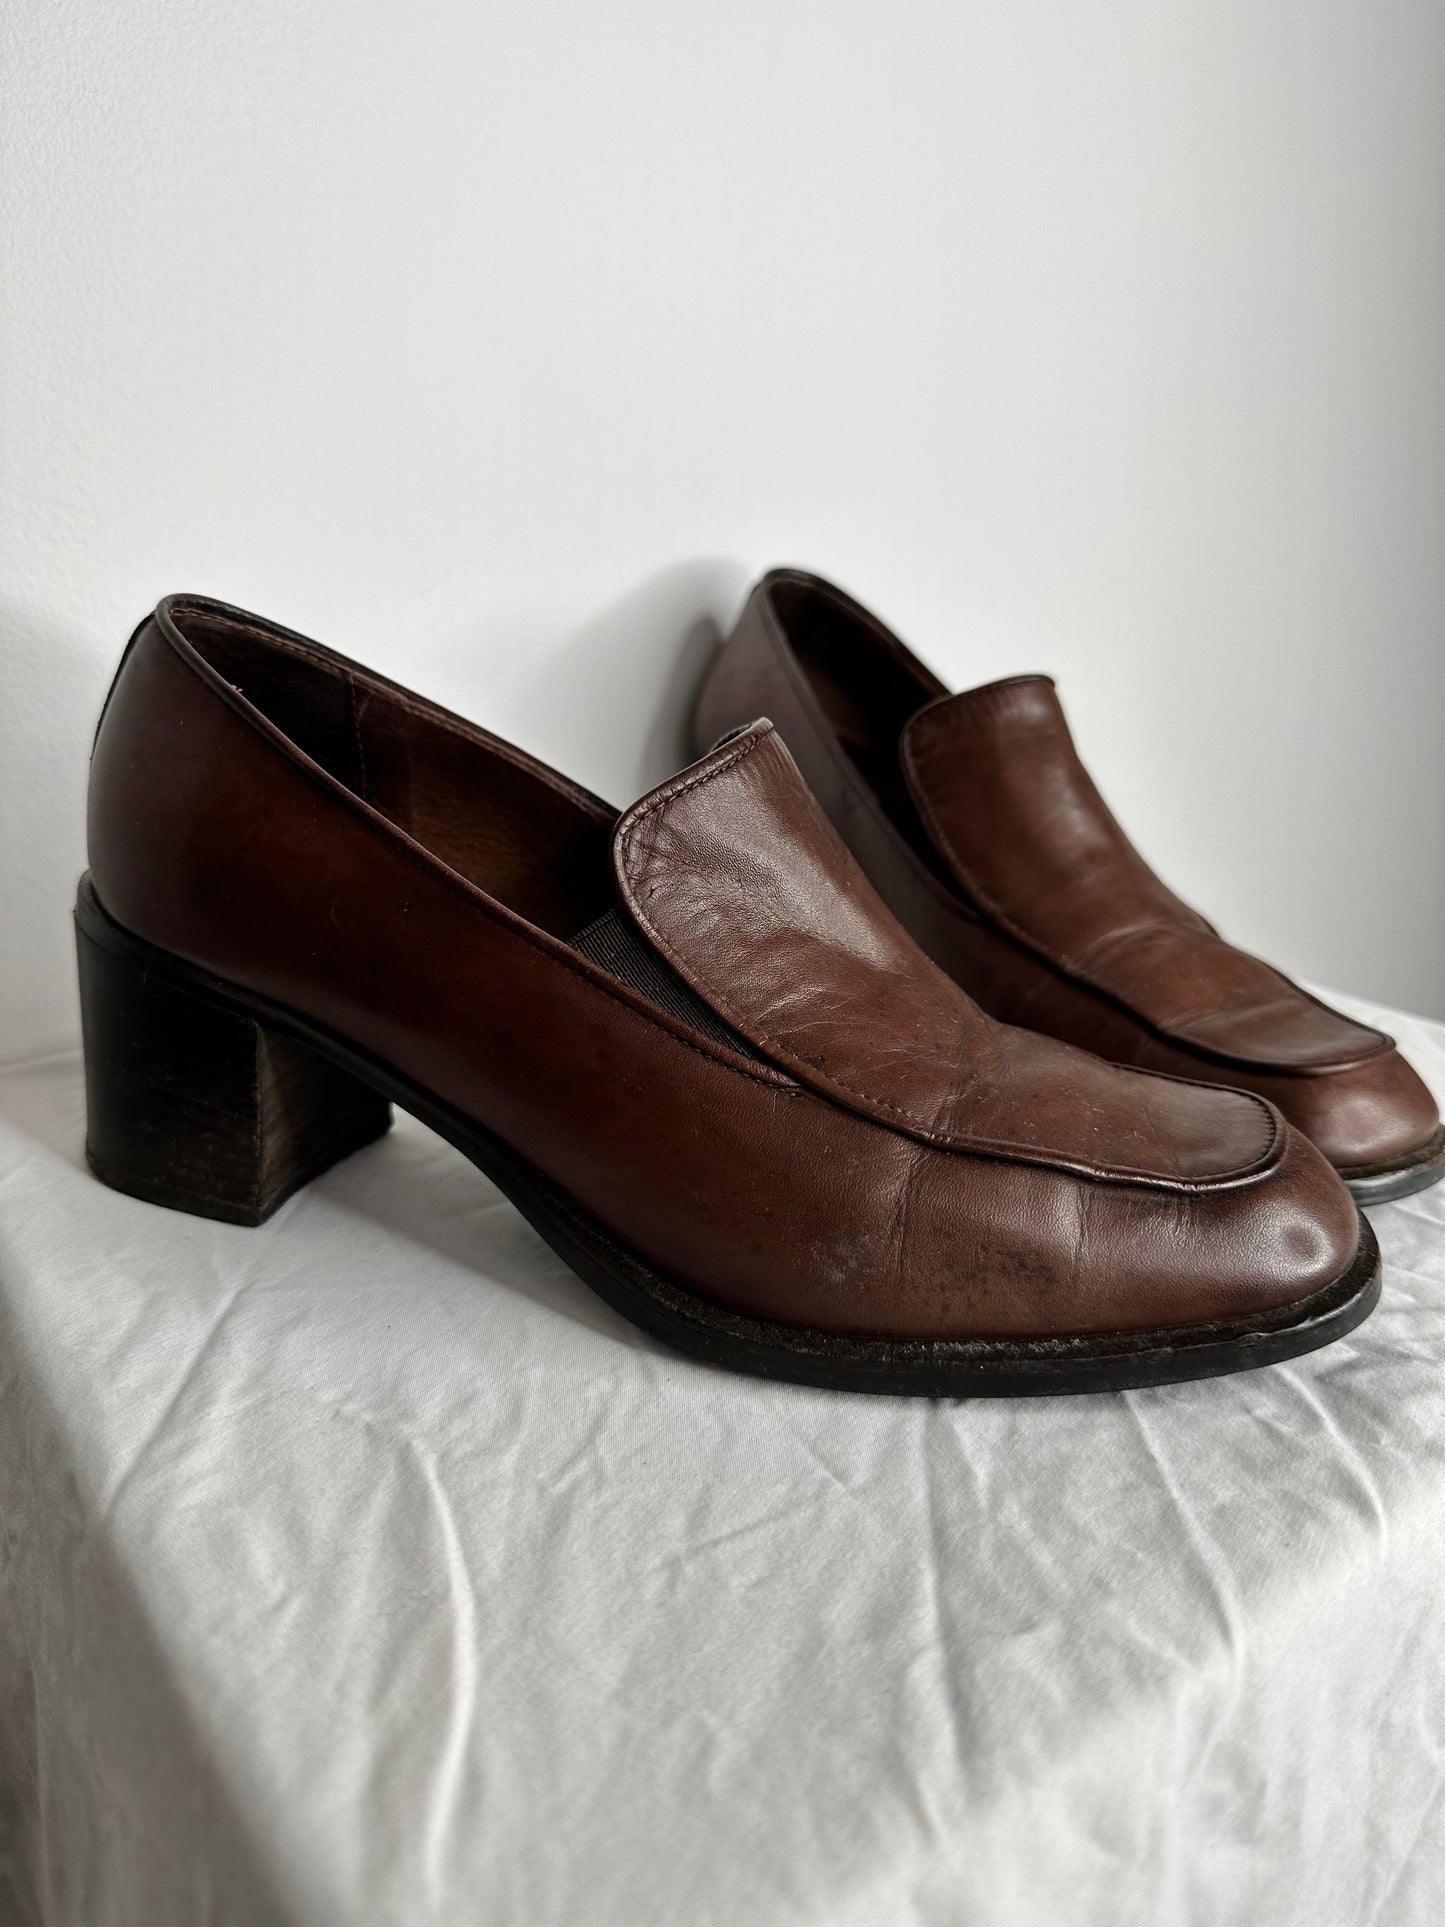 1990s Torretti Heeled Leather Loafers (US 8 / EU39)